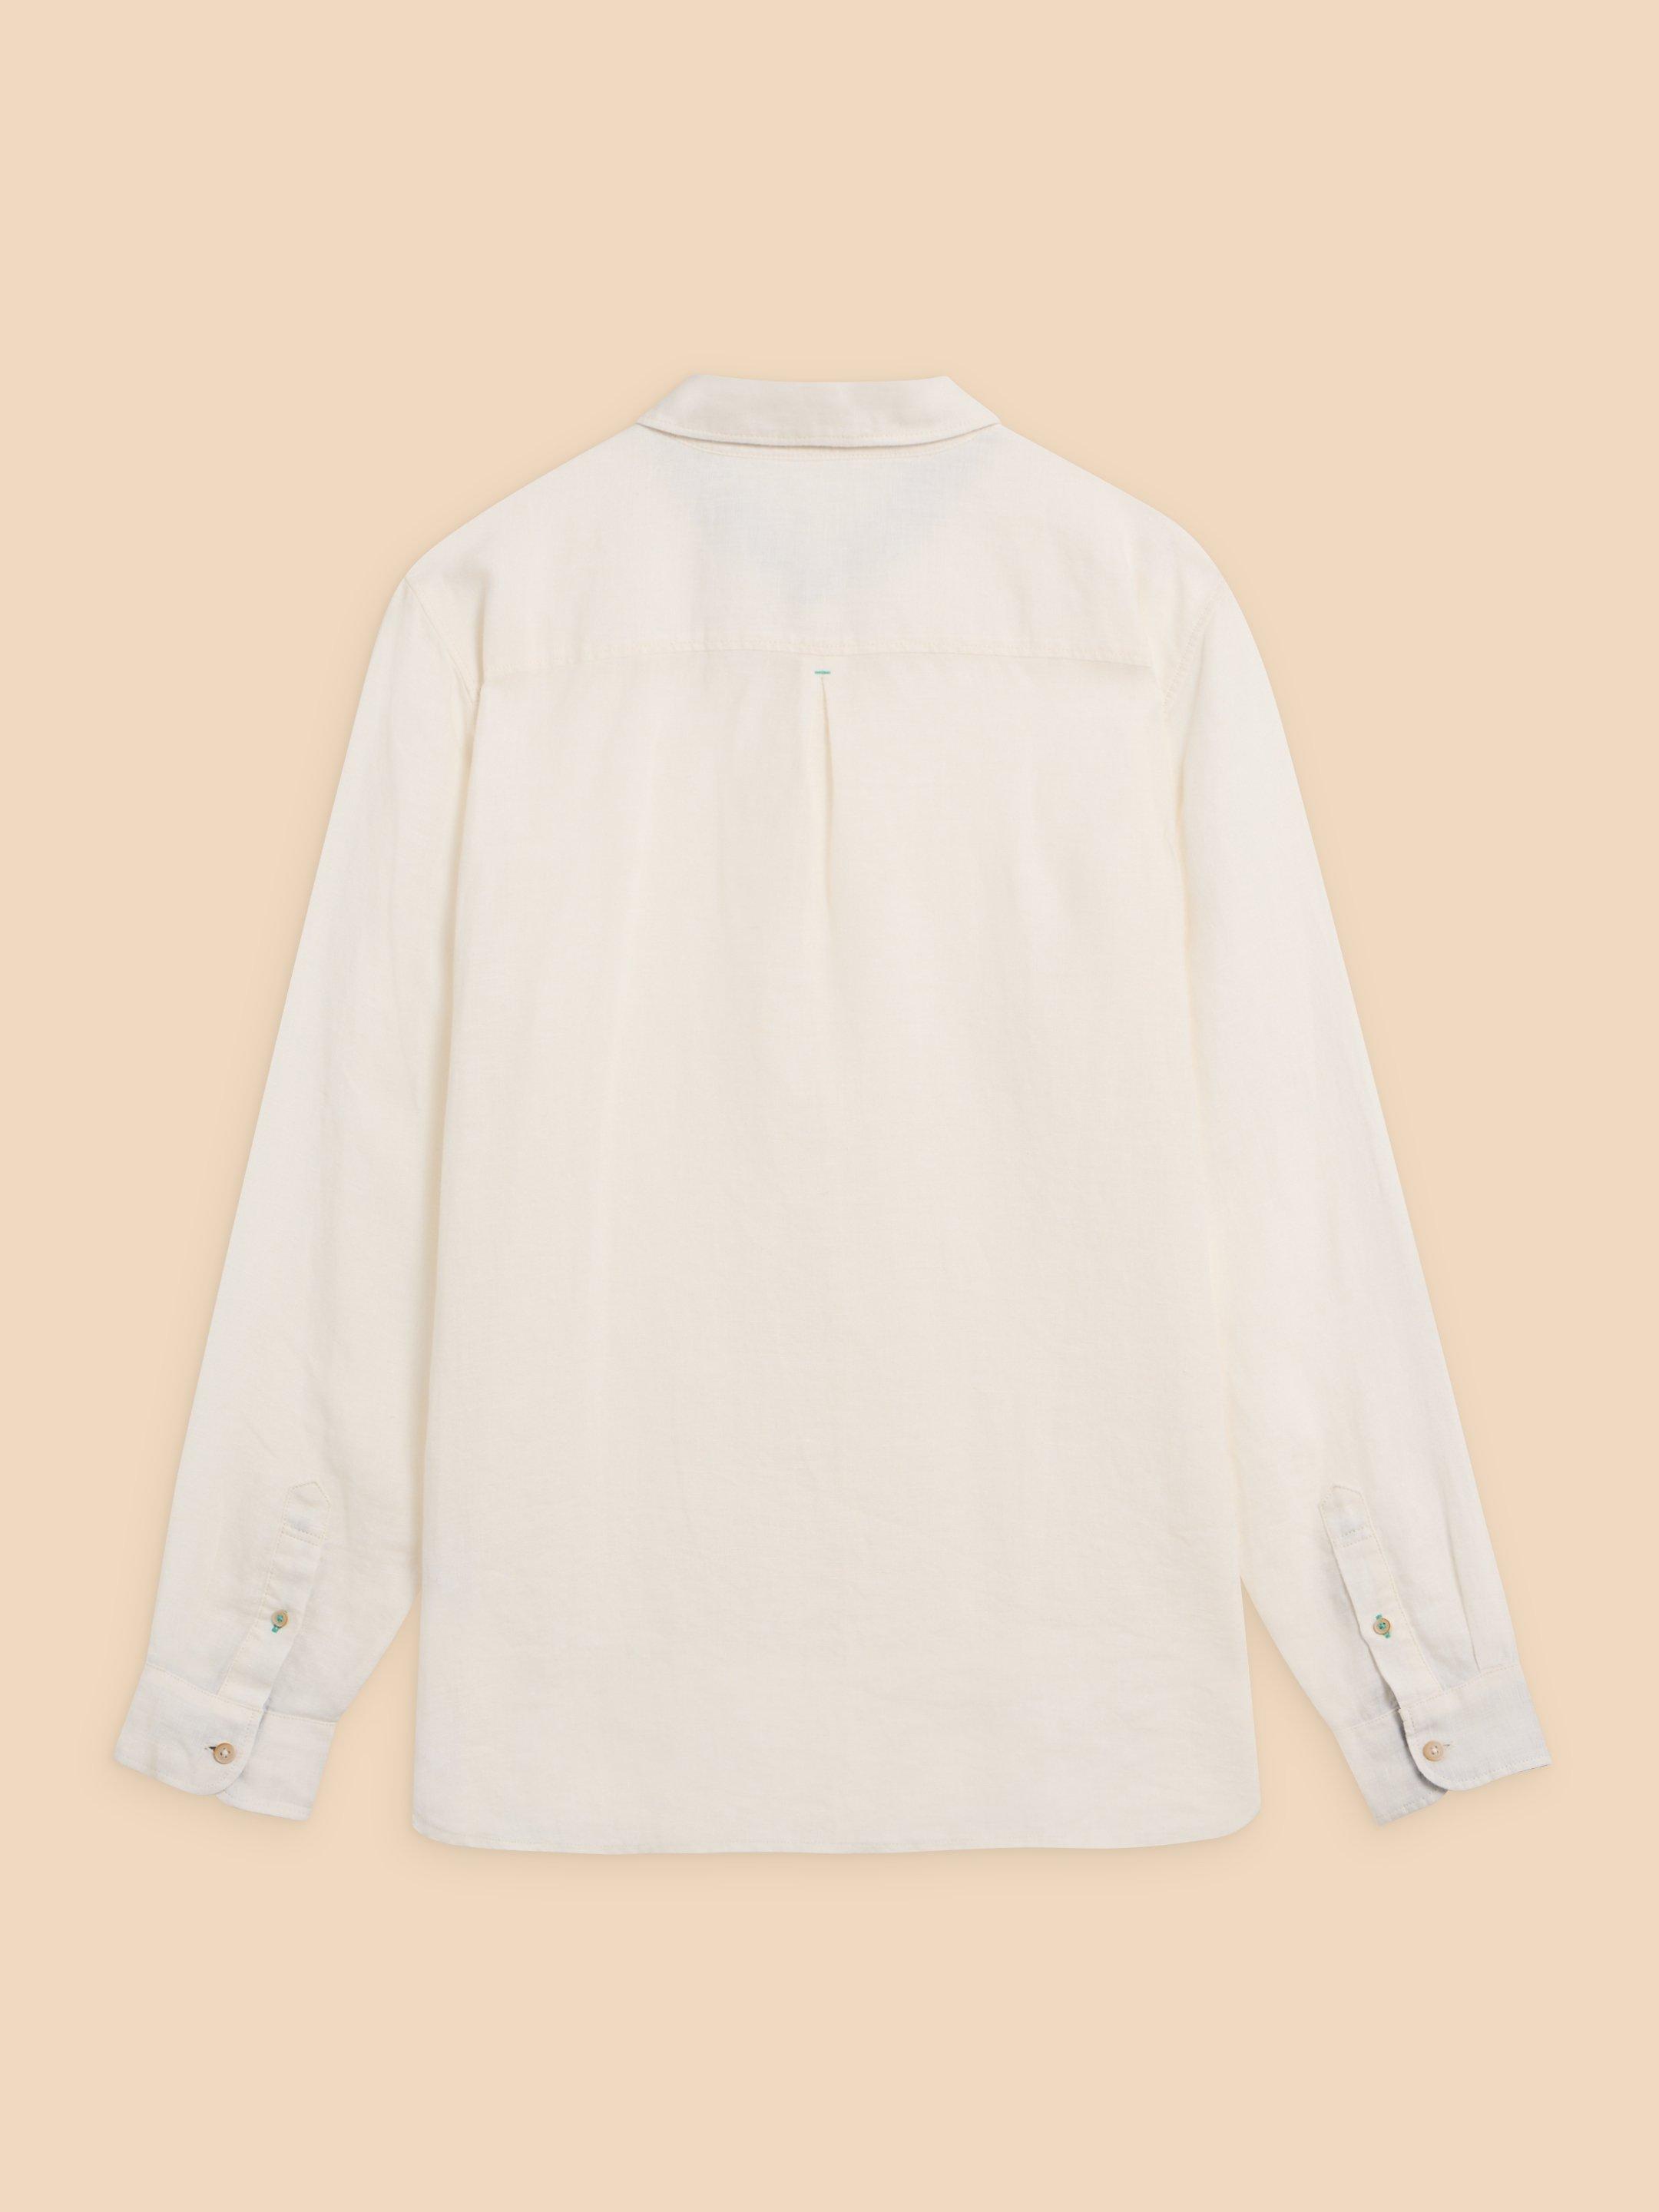 Pembroke LS Linen Shirt in BRIL WHITE - FLAT BACK